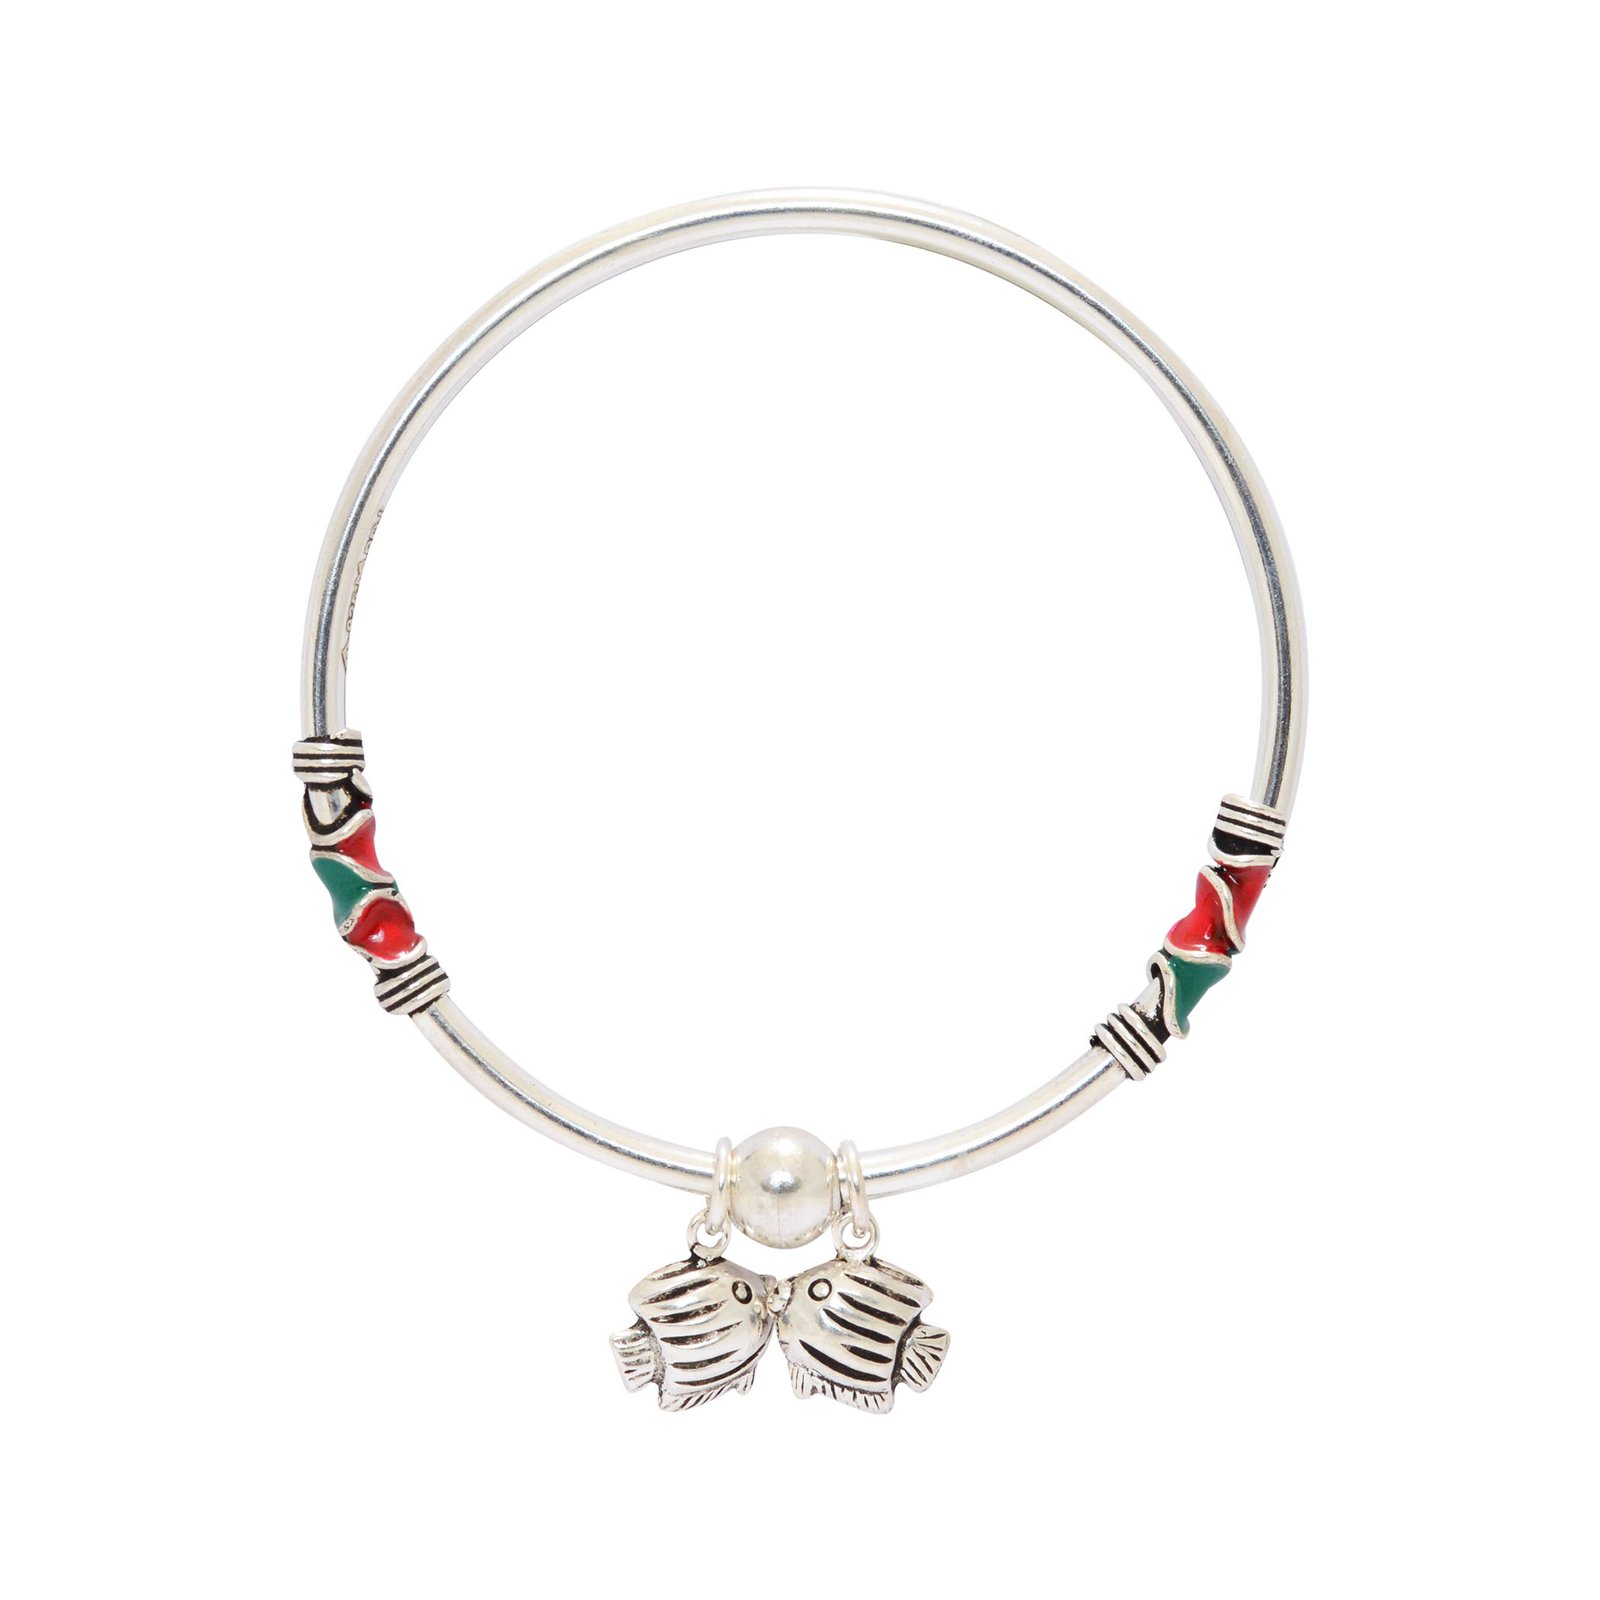 silver ladies bracelet - Navkkar Jewellers